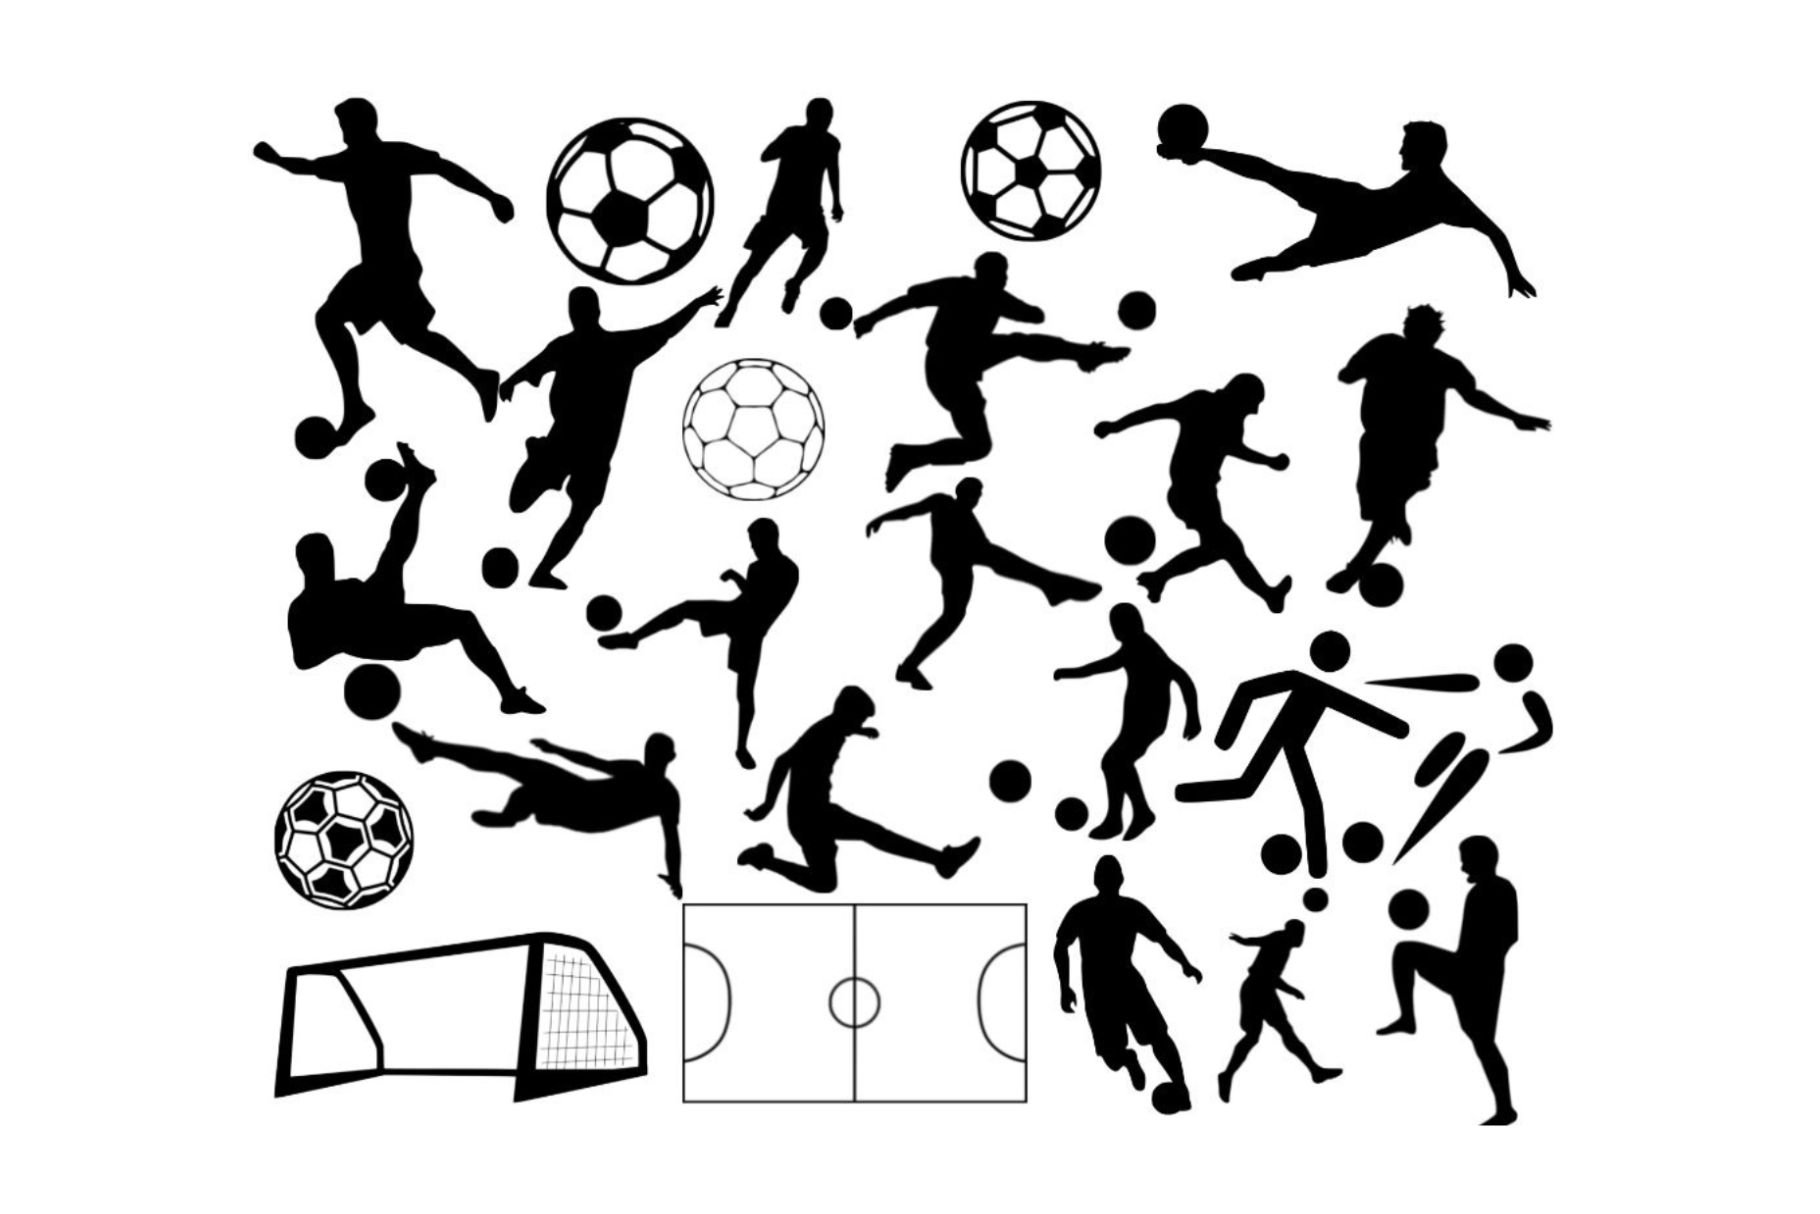 Soccer SVG cover image.